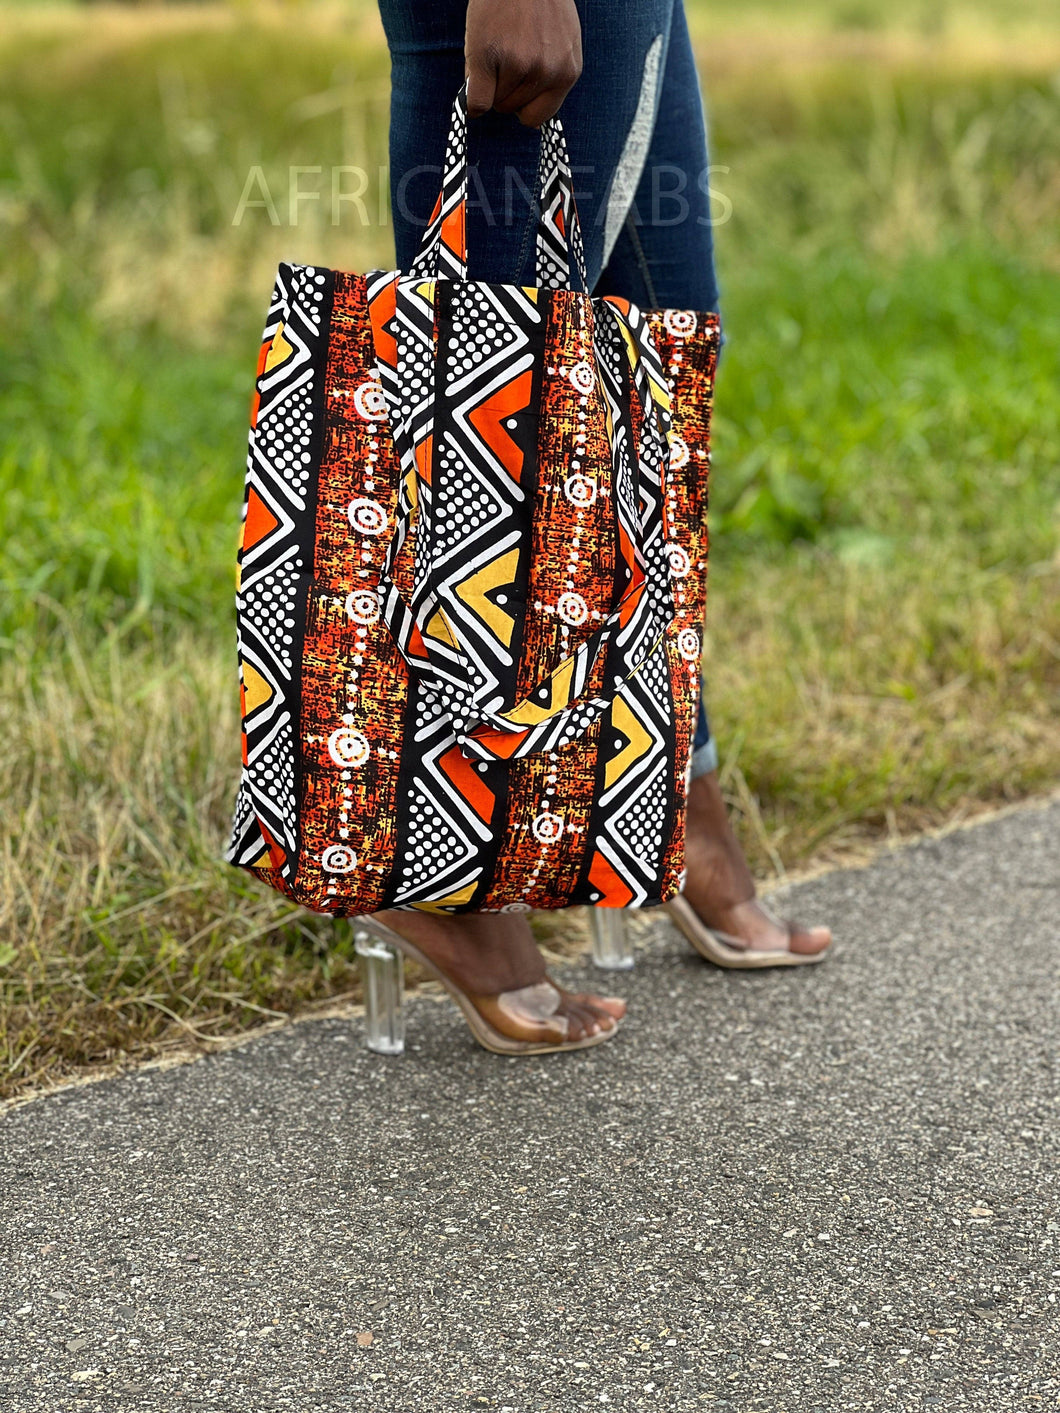 AfricanFabs - Shopper bag with African print - Orange bogolan - Reusable Shopping Bag made of cotton